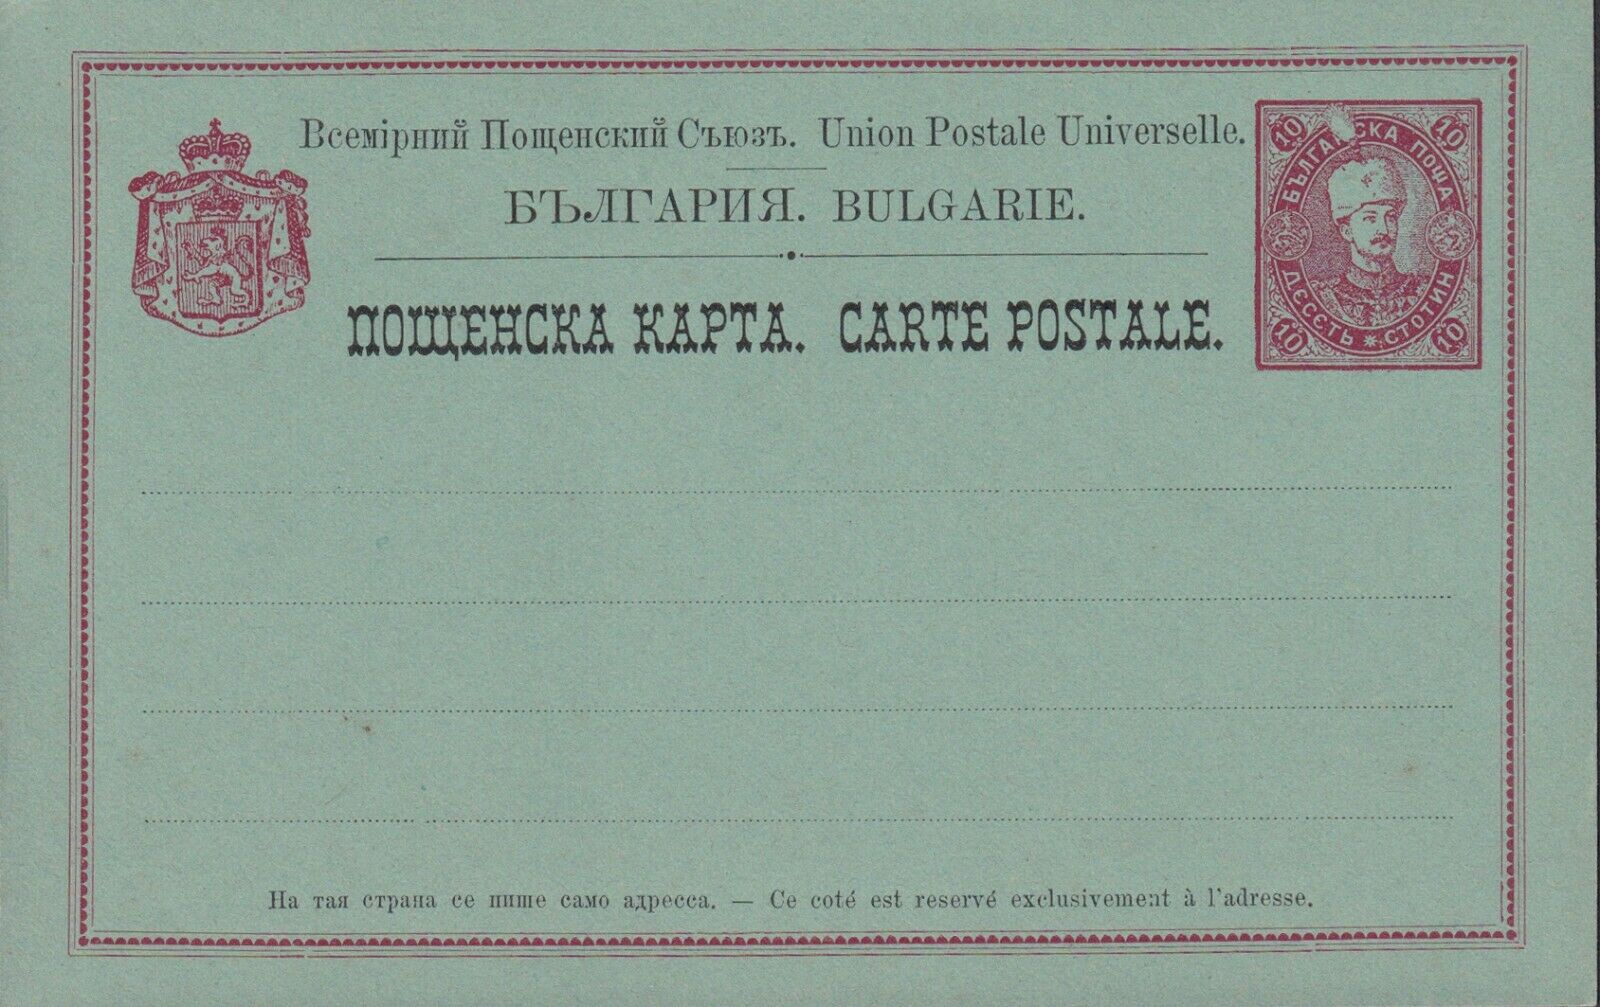 Bulgaria Essay Ps Card 10st Tsar Red & Black Printing On Blue-green Paper Framed